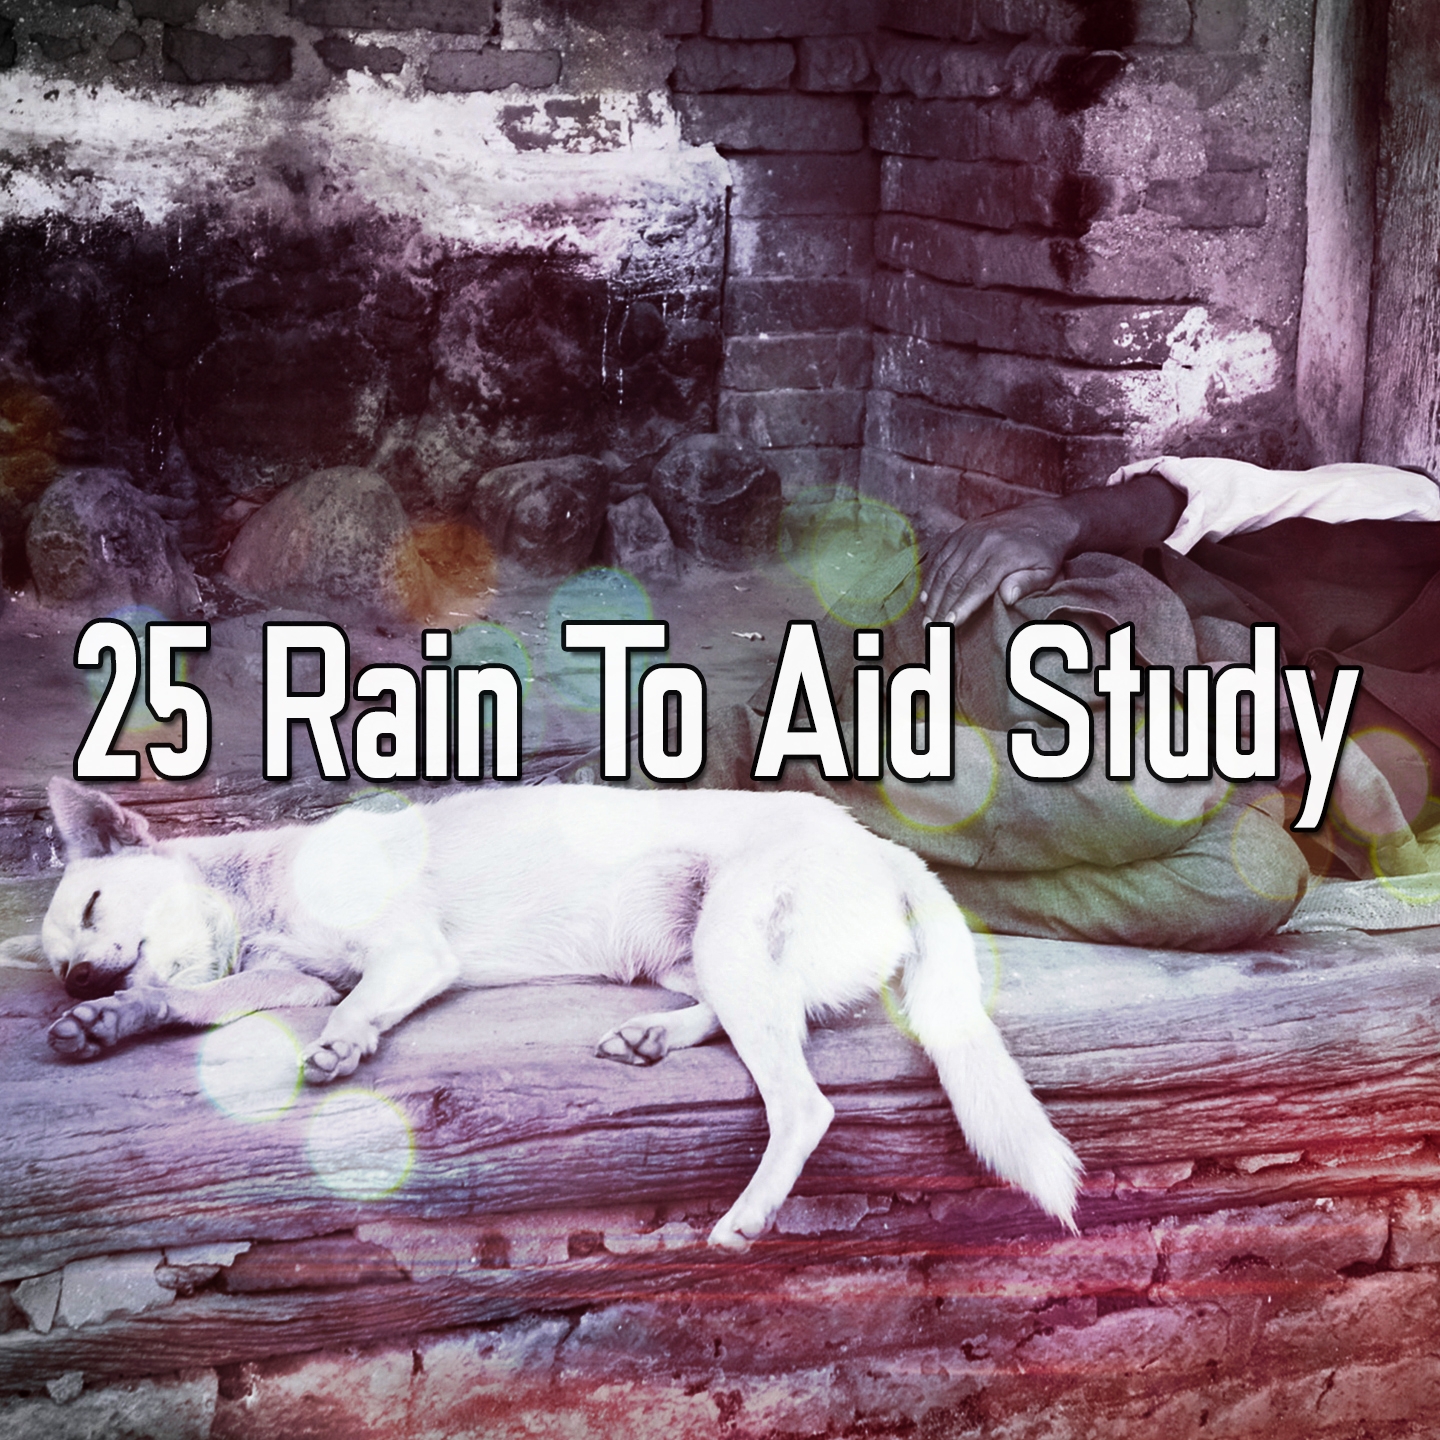 25 Rain to Aid Study